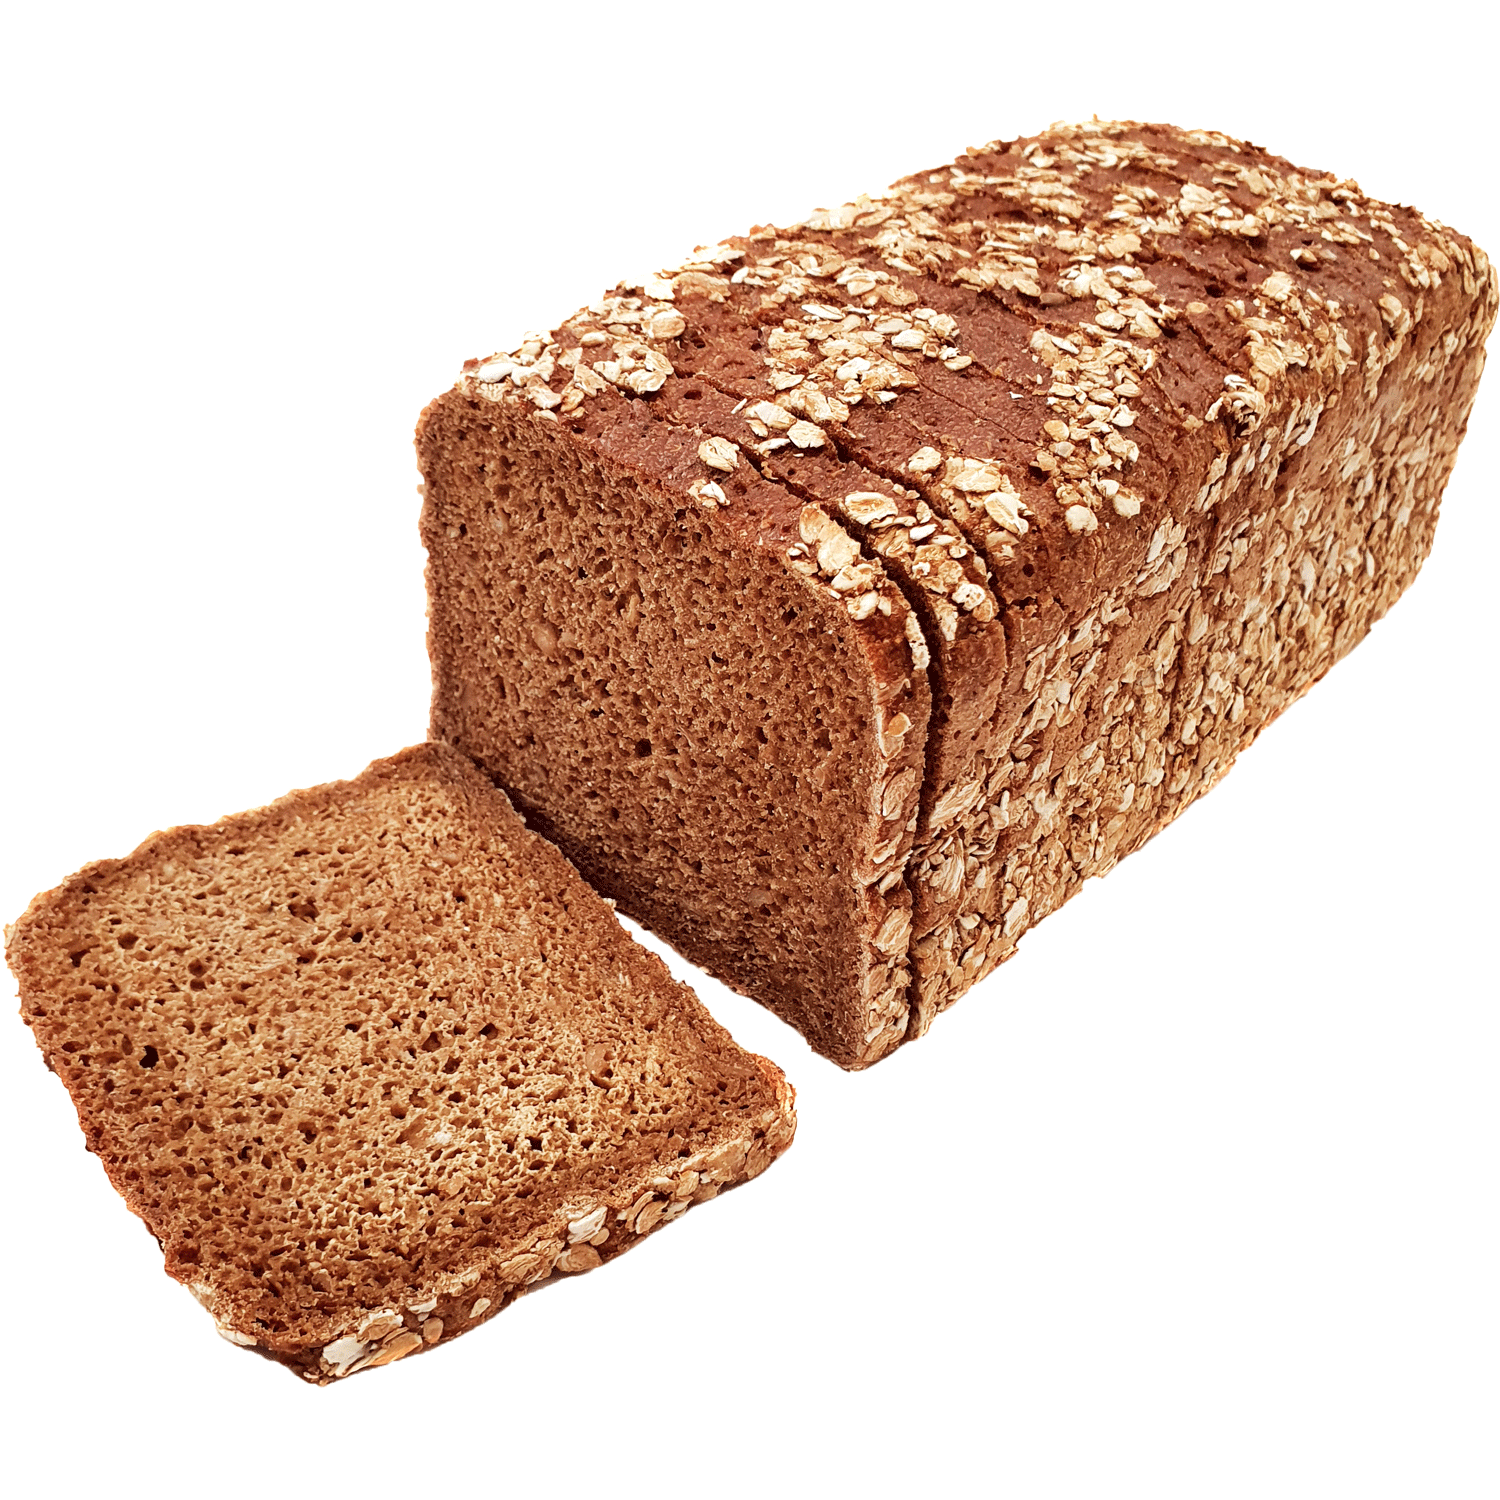 Pan de molde integral 1 kg